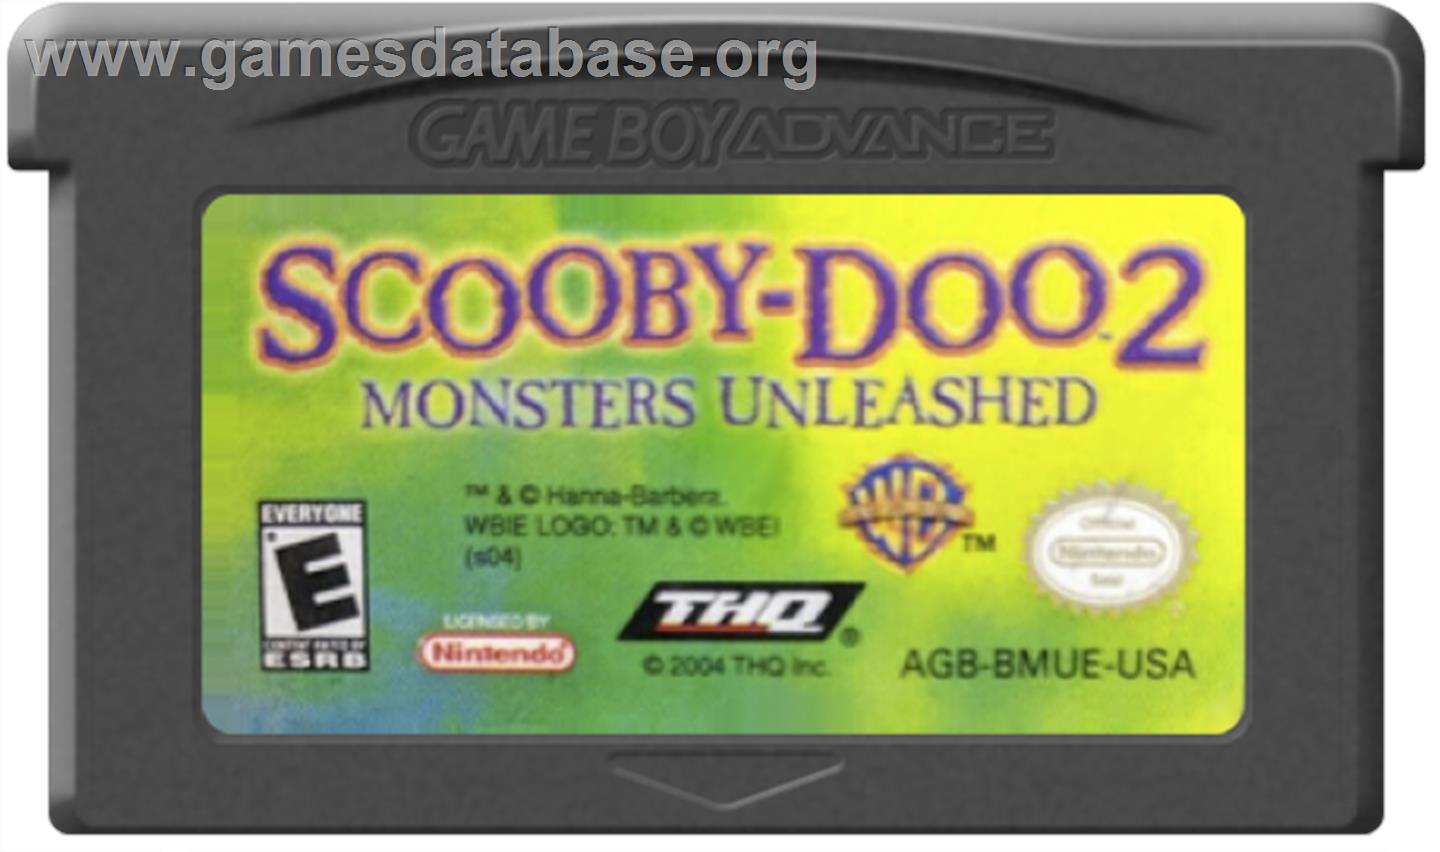 Scooby Doo 2: Monsters Unleashed - Nintendo Game Boy Advance - Artwork - Cartridge